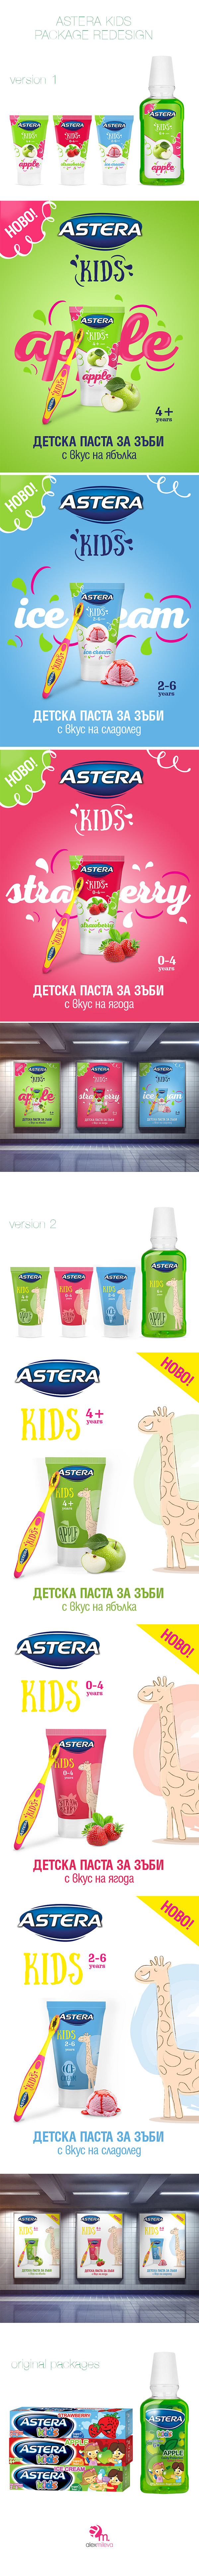 Astera Kids toothpaste redesign